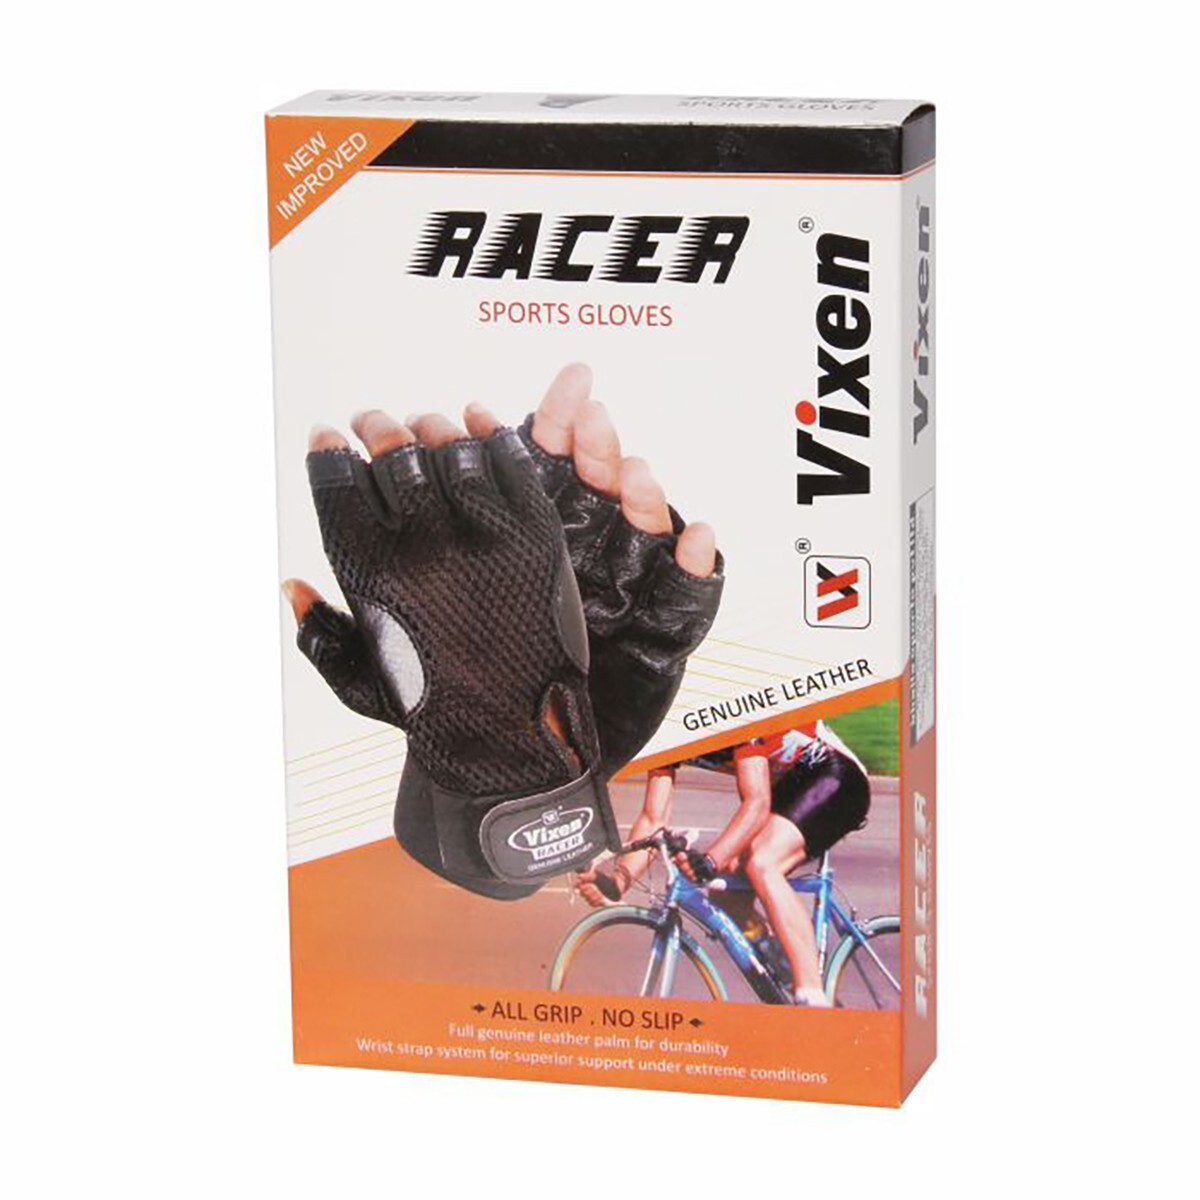 Vixen Racer Weighy Lifting Gloves